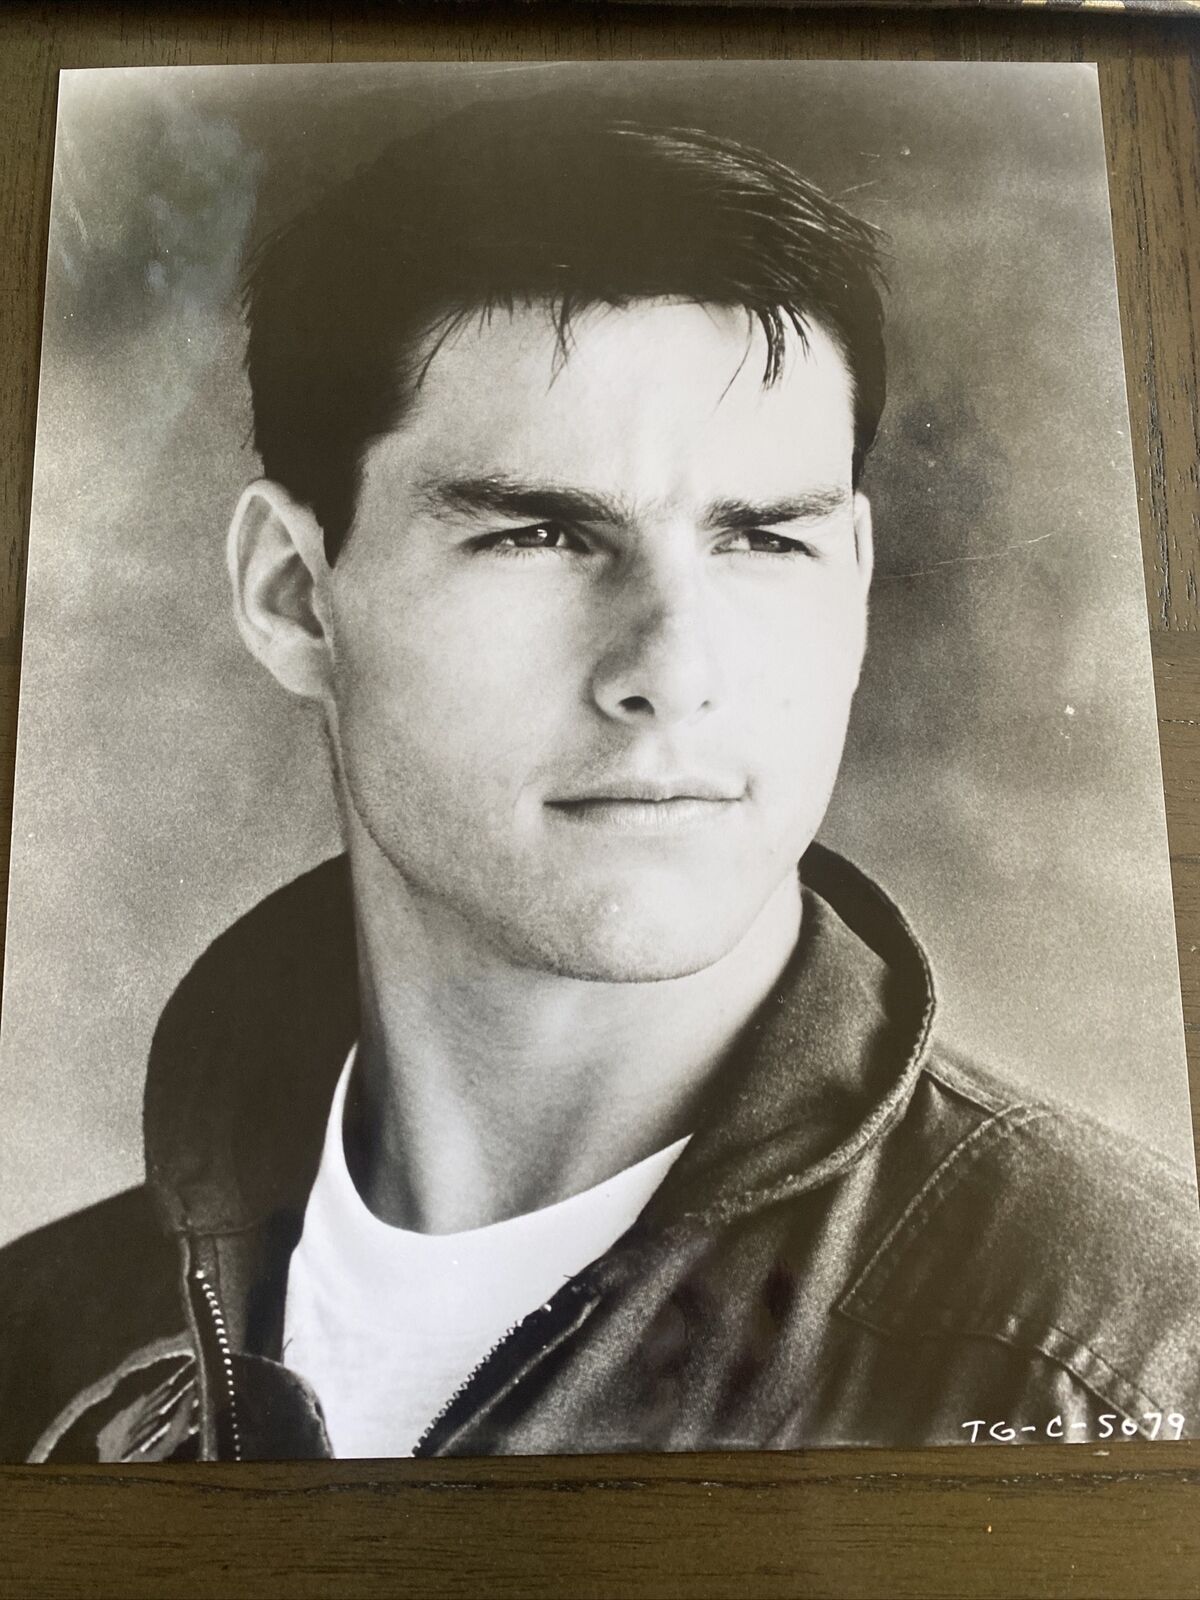 Tom Cruise Top Gun Reprint photo tg-c-5079.